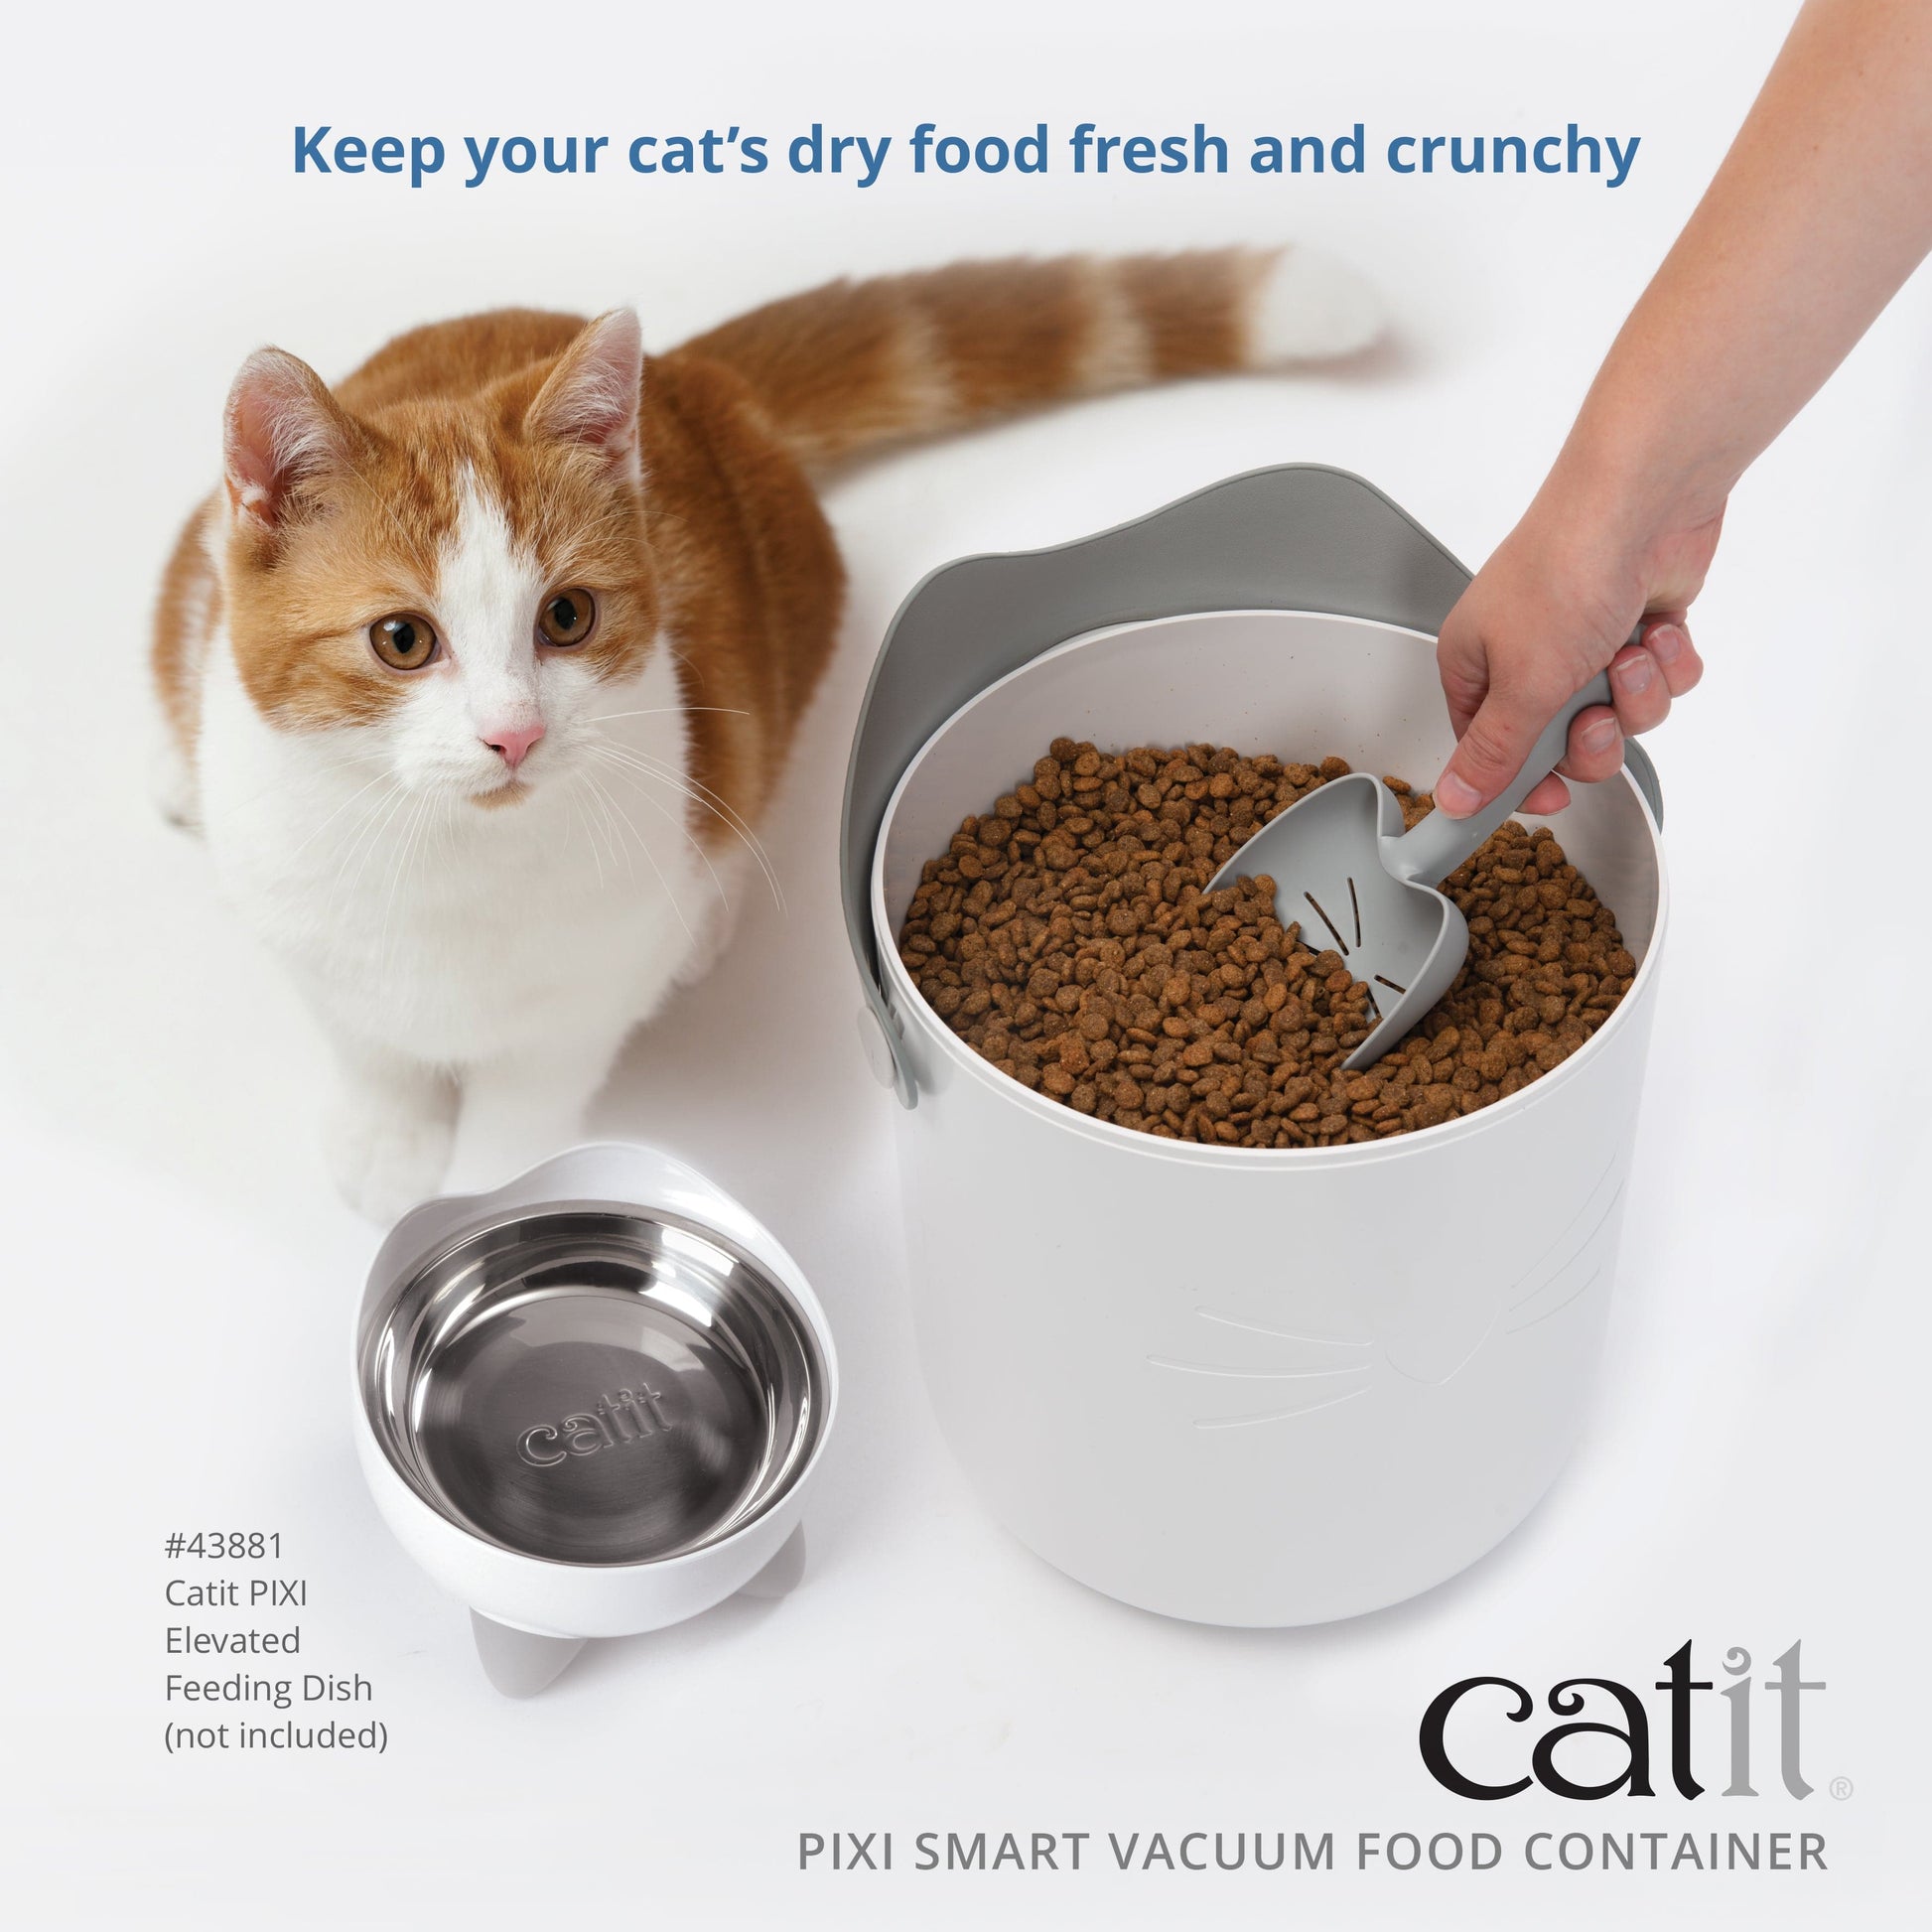 Catit PIXI Elevated Feeding Dish - Products